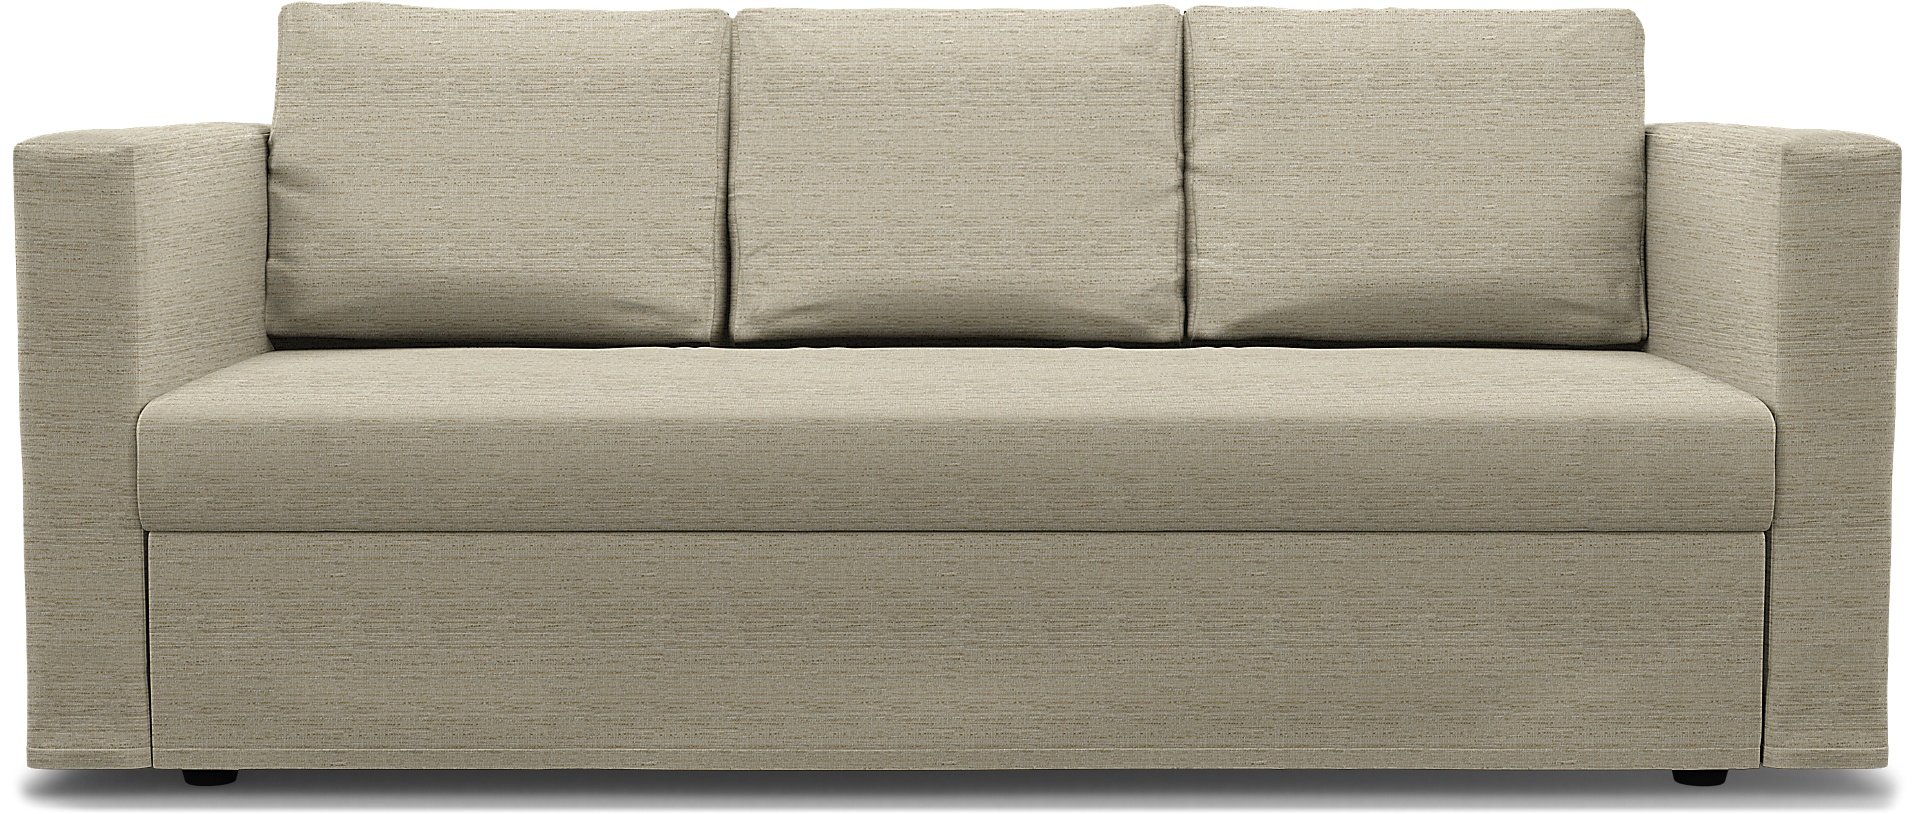 IKEA - Friheten 3 Seater Sofa Bed Cover, Light Sand, Boucle & Texture - Bemz